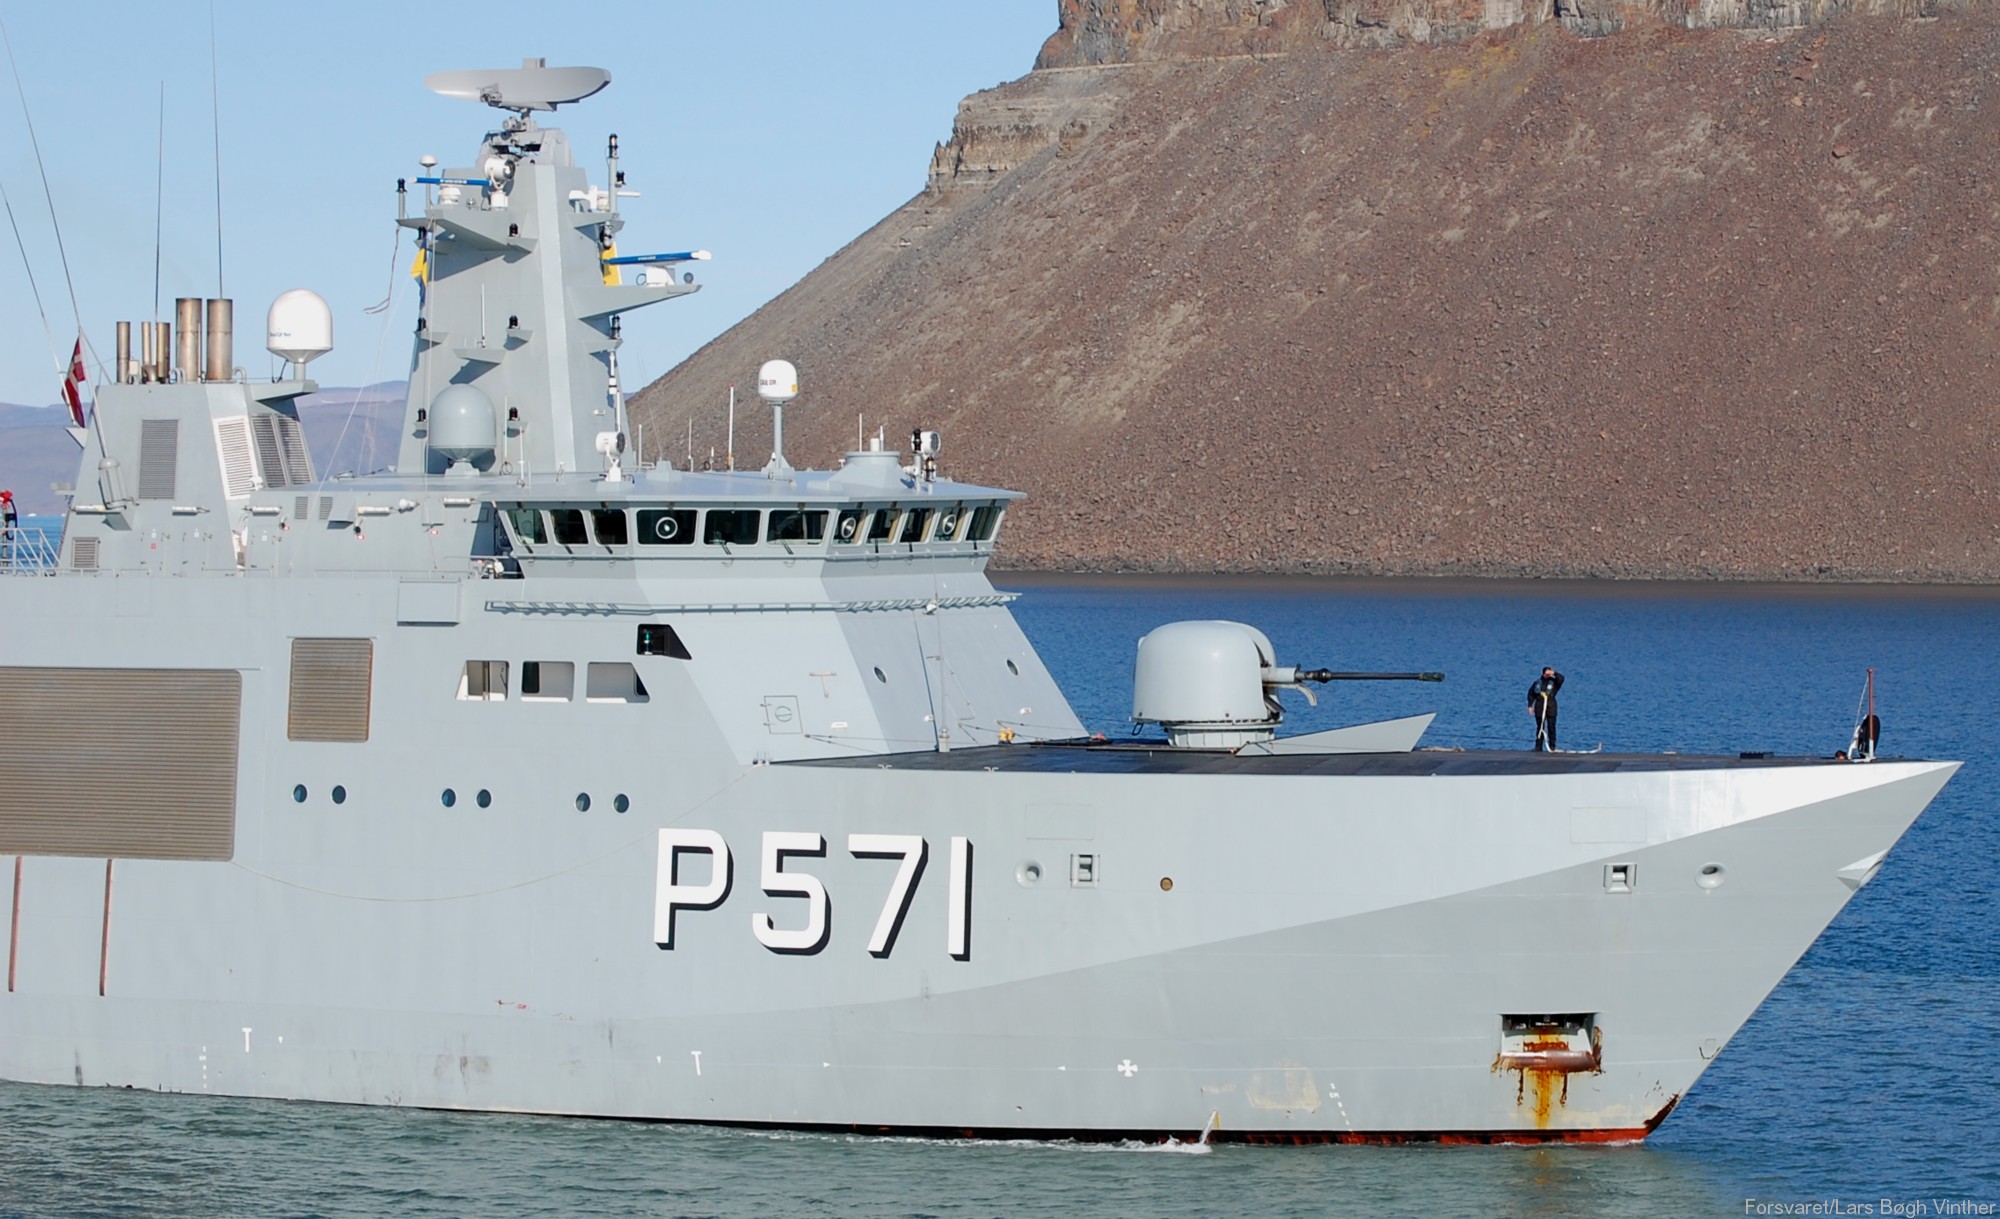 p-571 hdms ejnar mikkelsen knud rasmussen class offshore patrol vessel opv royal danish navy inspektionsfartøj 36